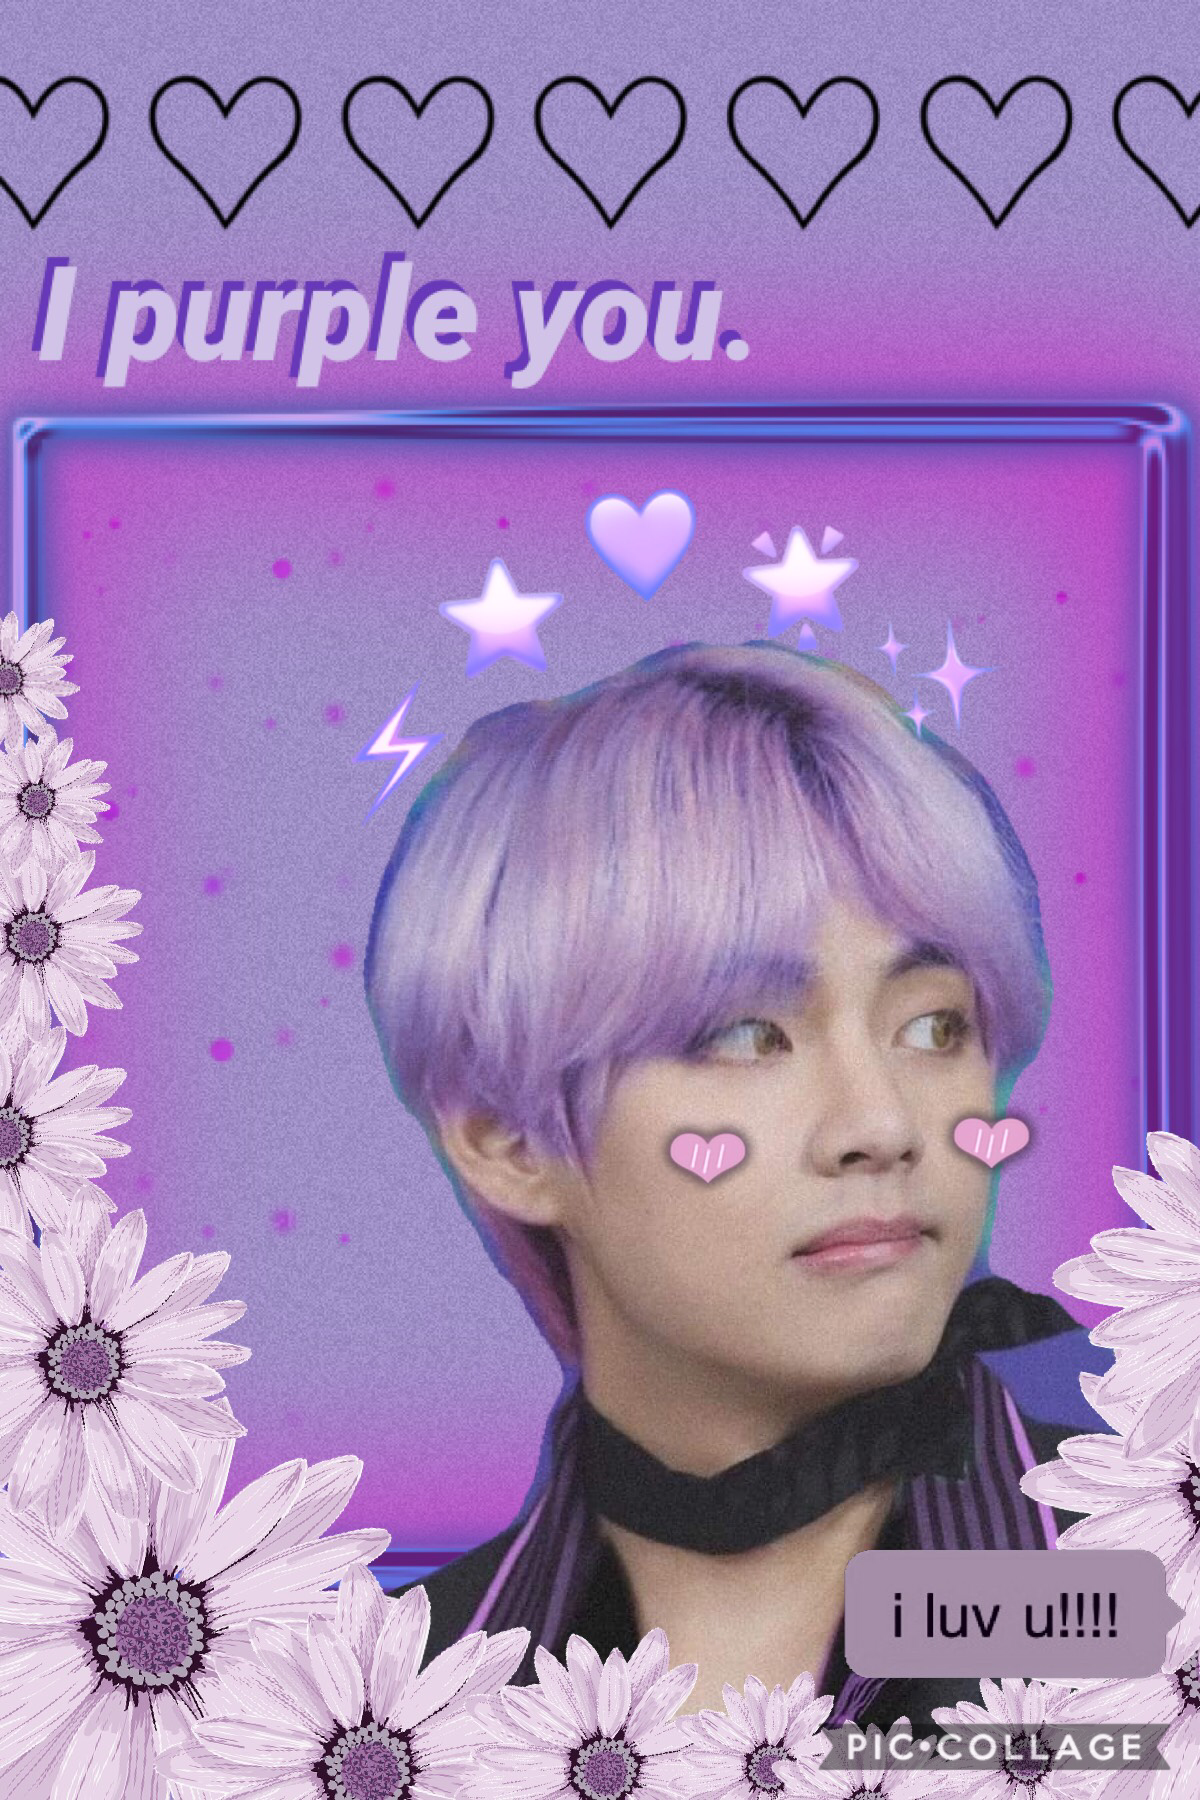 <💜>
Purple you Tae💜💜💜